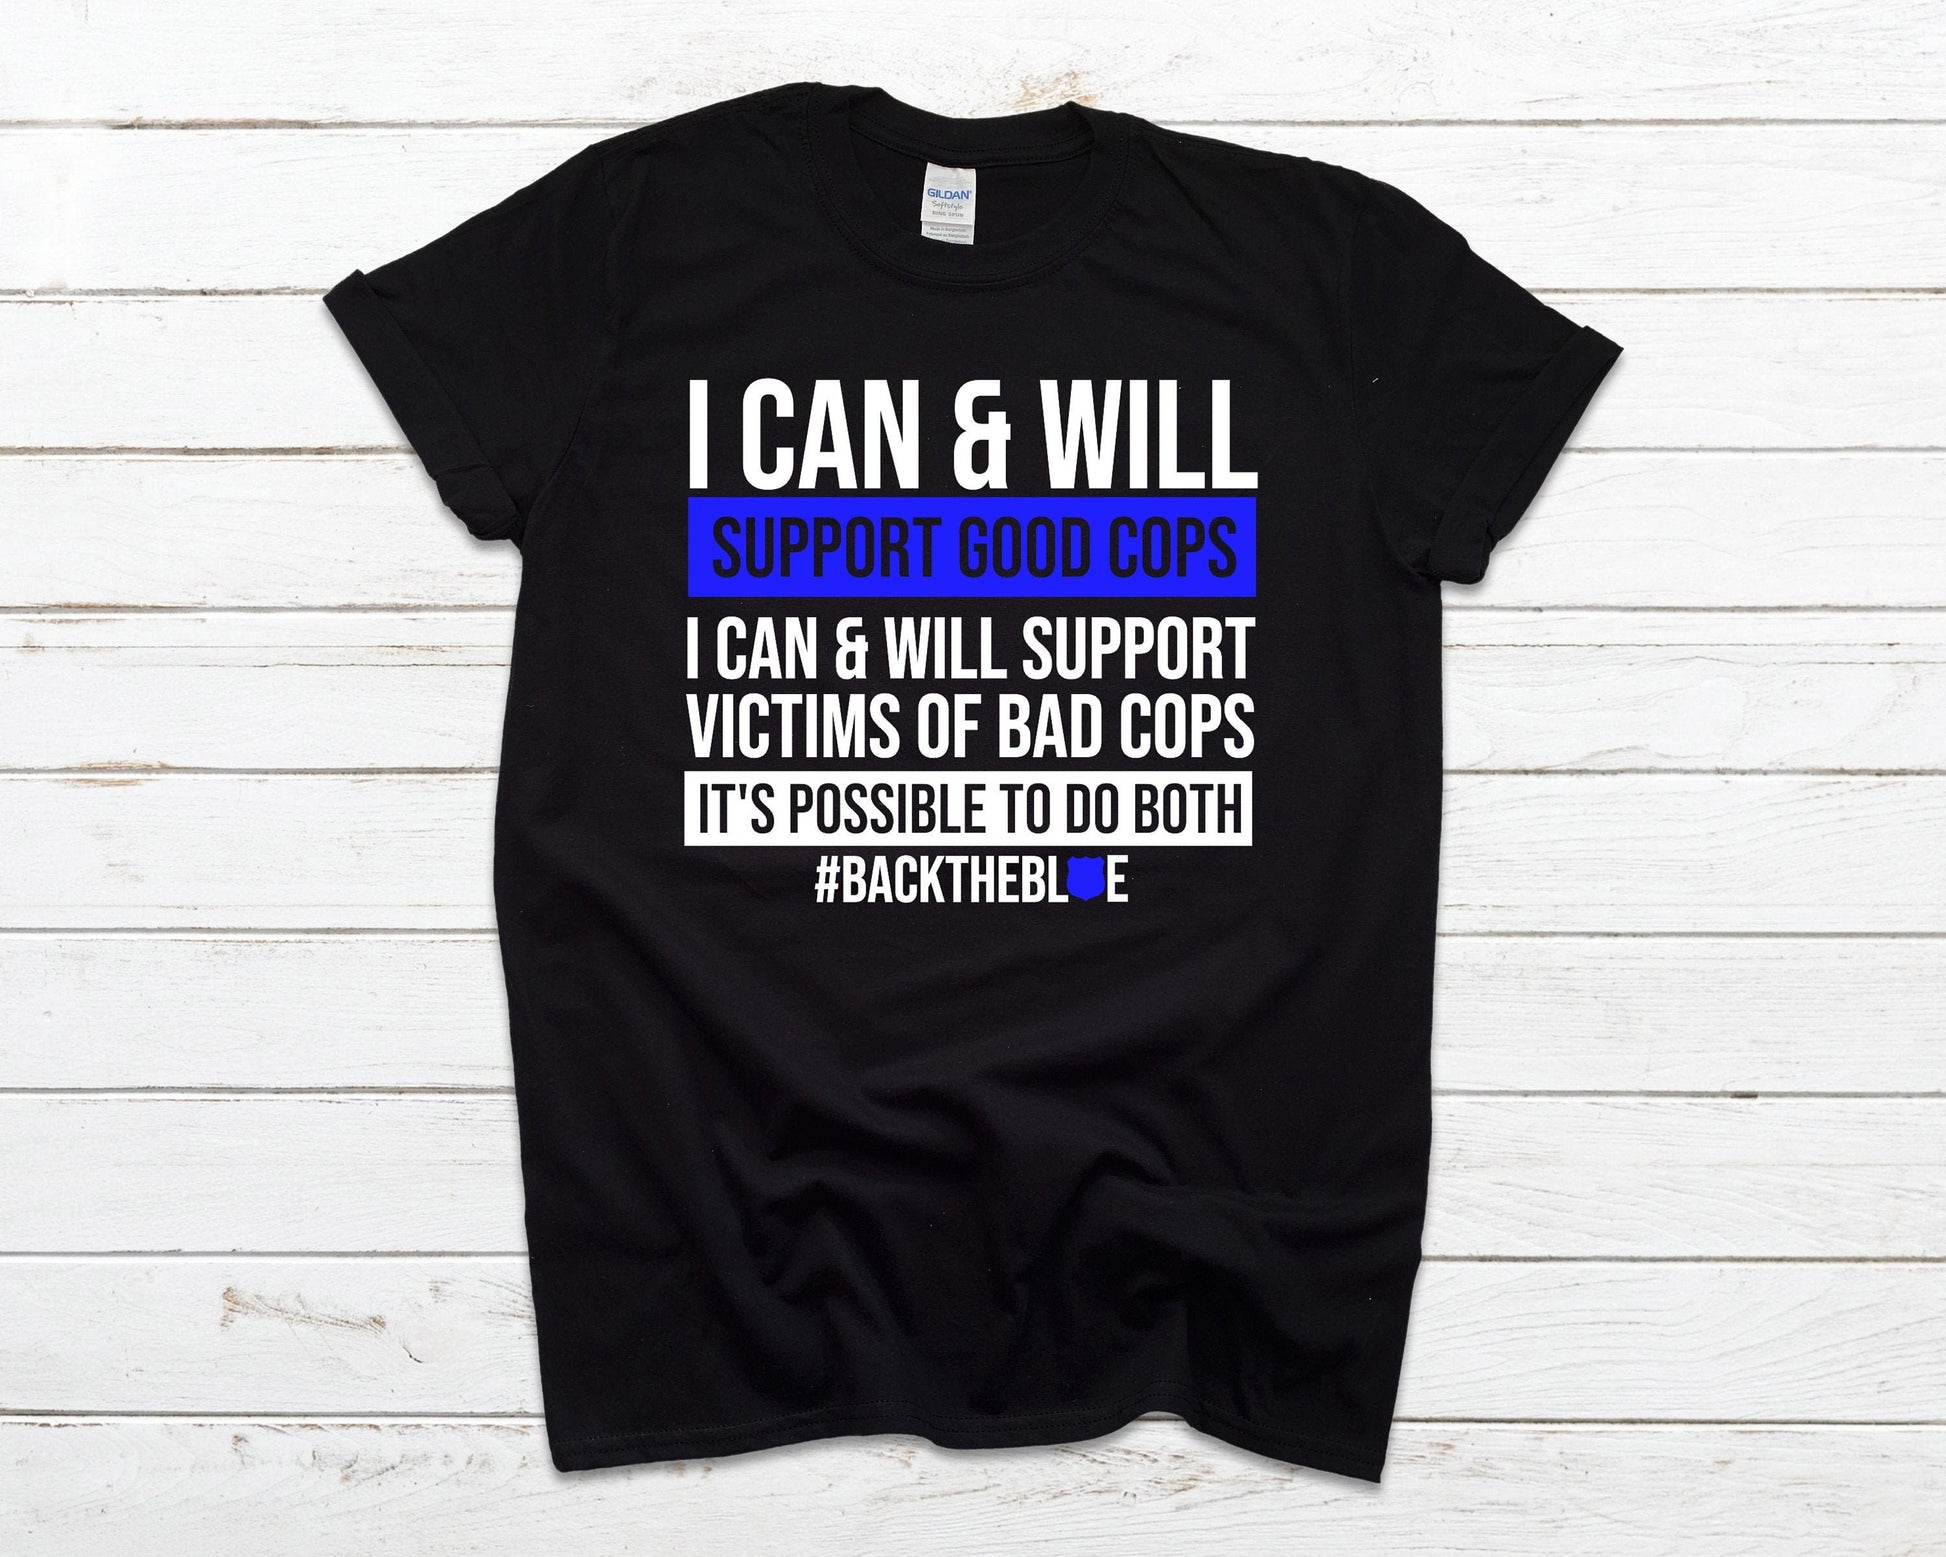 Support Good Cops unisex t-shirt - Police Support - Blue Lives Matter - Black Lives Matter - Thin Blue Line Shirt - Police Lives Matter